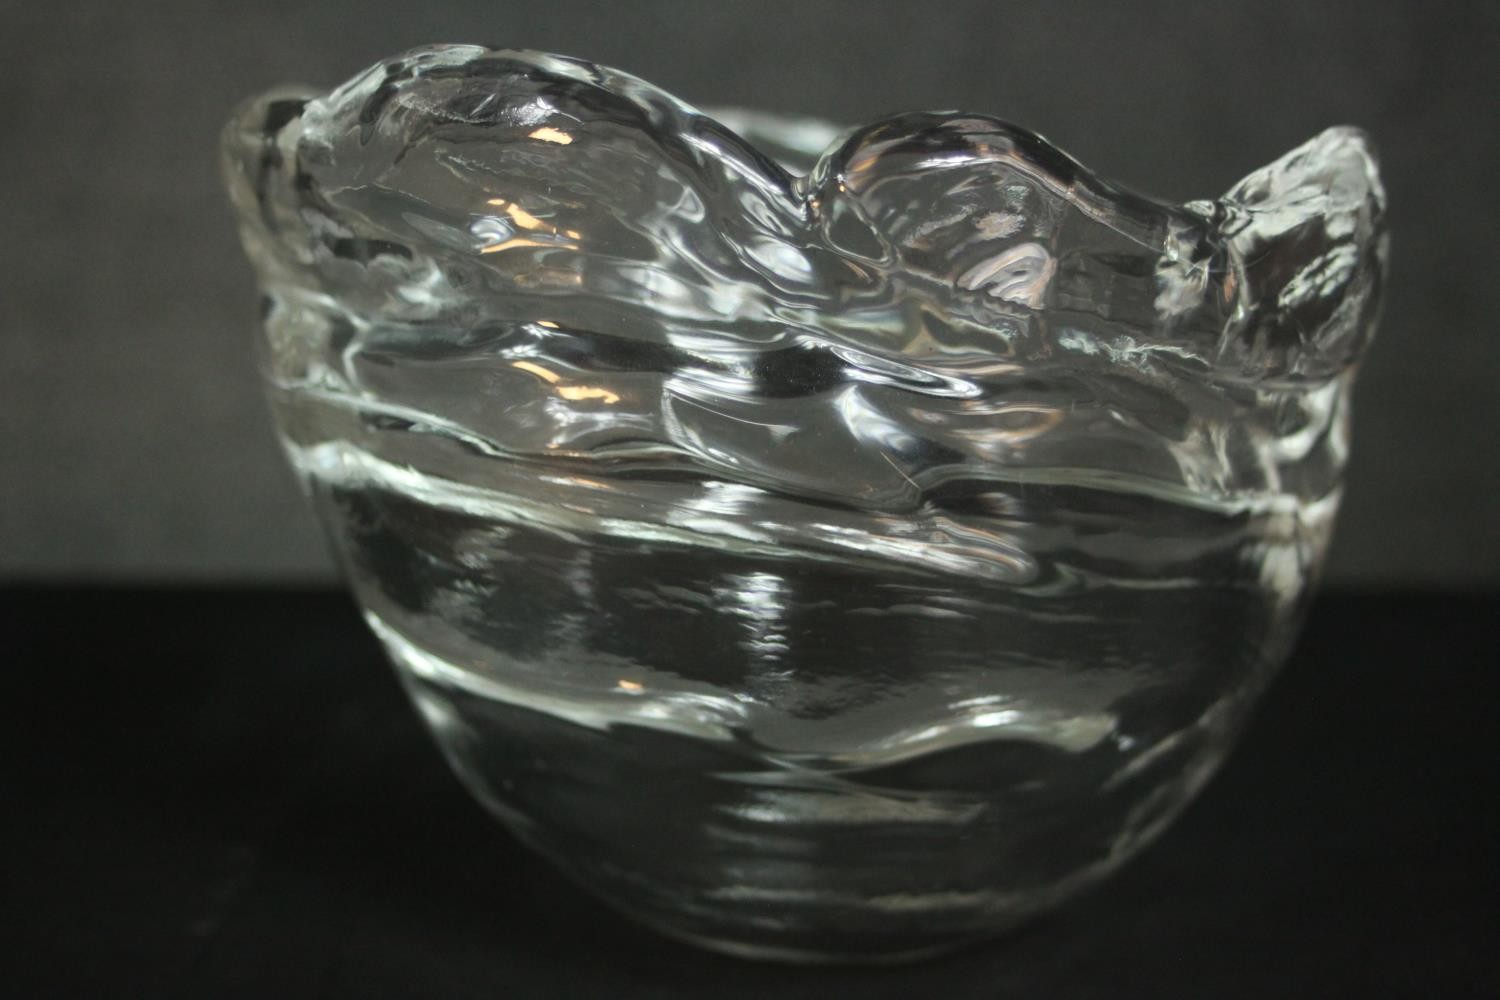 Lasvit (Czech), a 'Frozen' glass bowl designed by Maxim Velcovsky, with original box. - Image 2 of 11